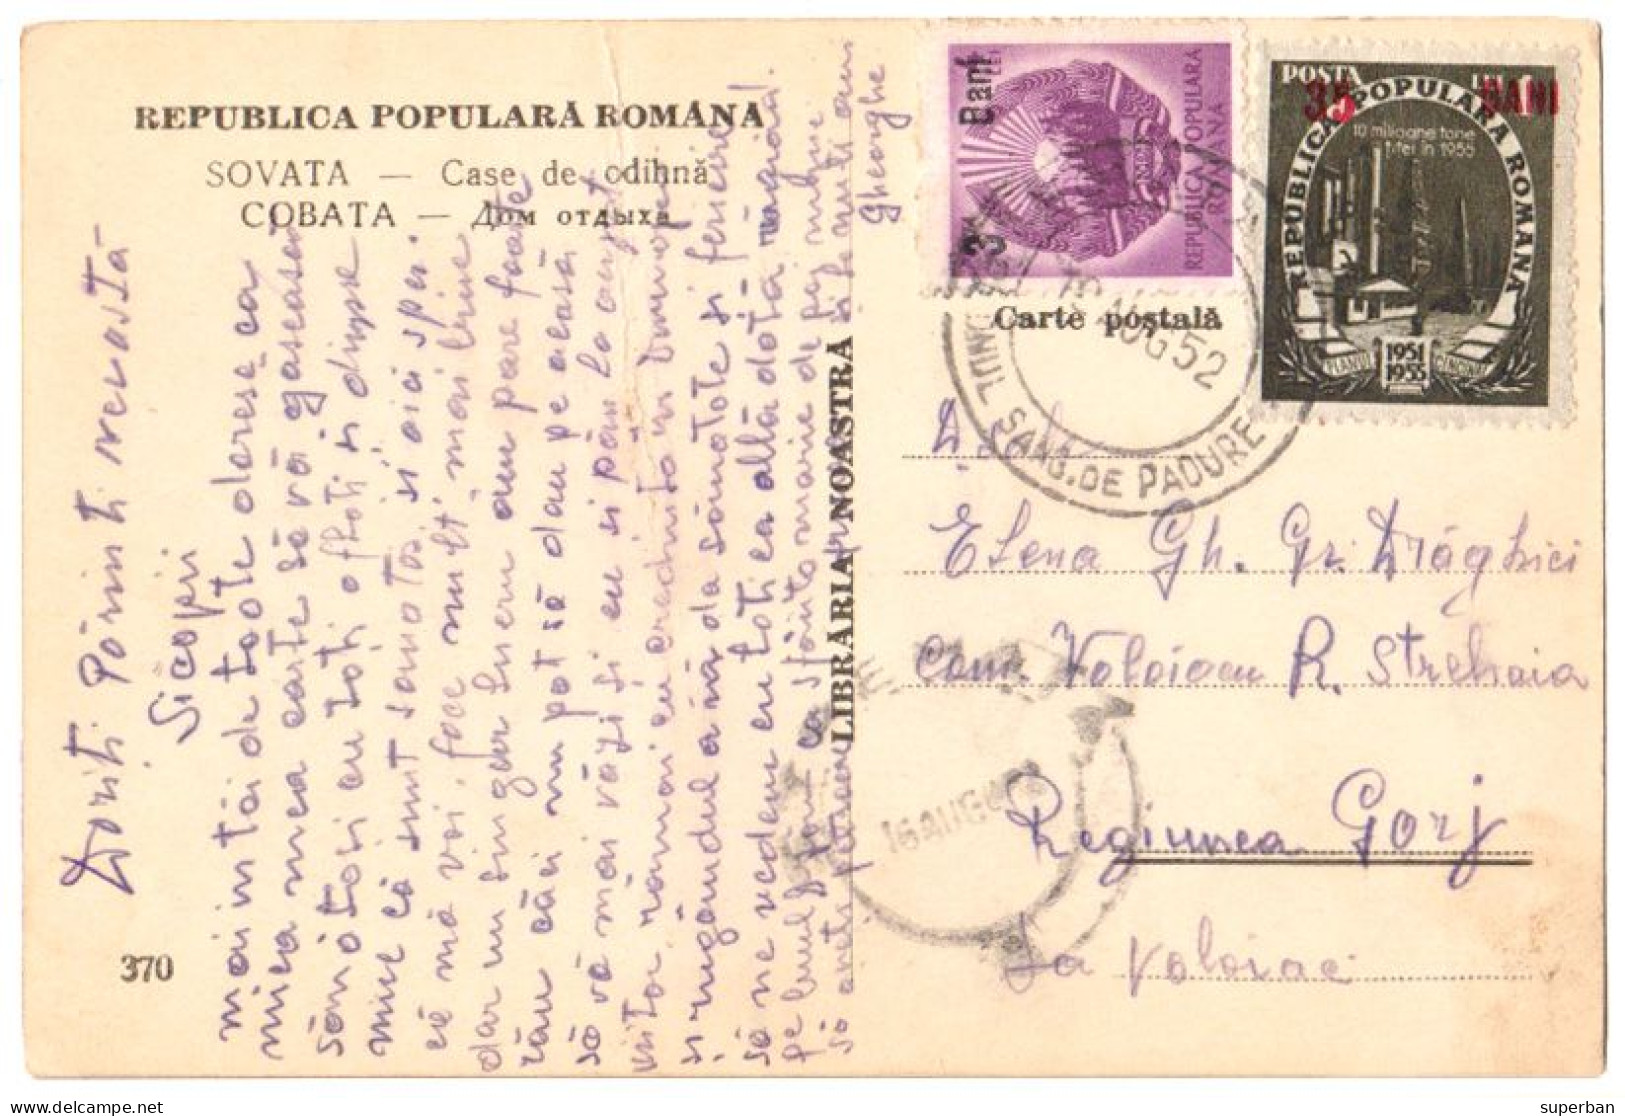 ROMANIA : 1952 - STABILIZAREA MONETARA / MONETARY STABILIZATION - POSTCARD MAILED With OVERPRINTED STAMPS - RRR (am195) - Briefe U. Dokumente